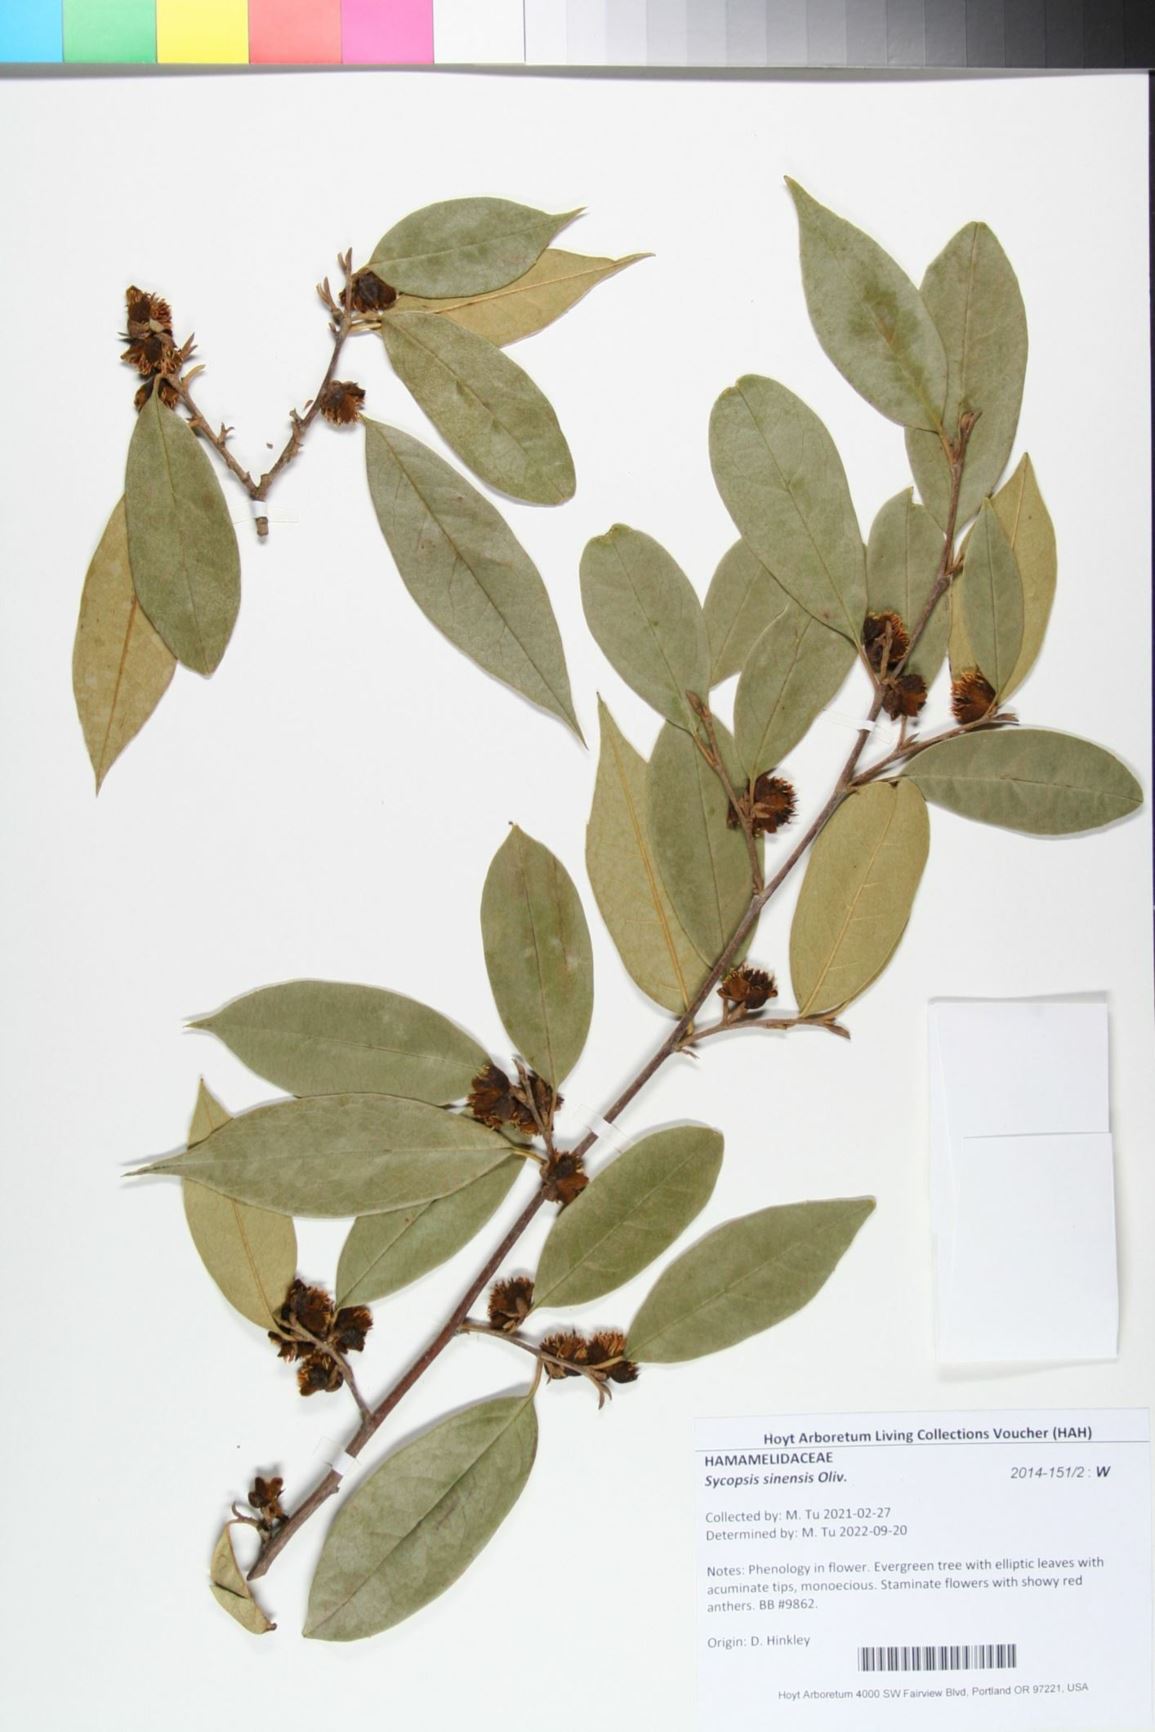 Sycopsis sinensis - Chinese Fig Hazel